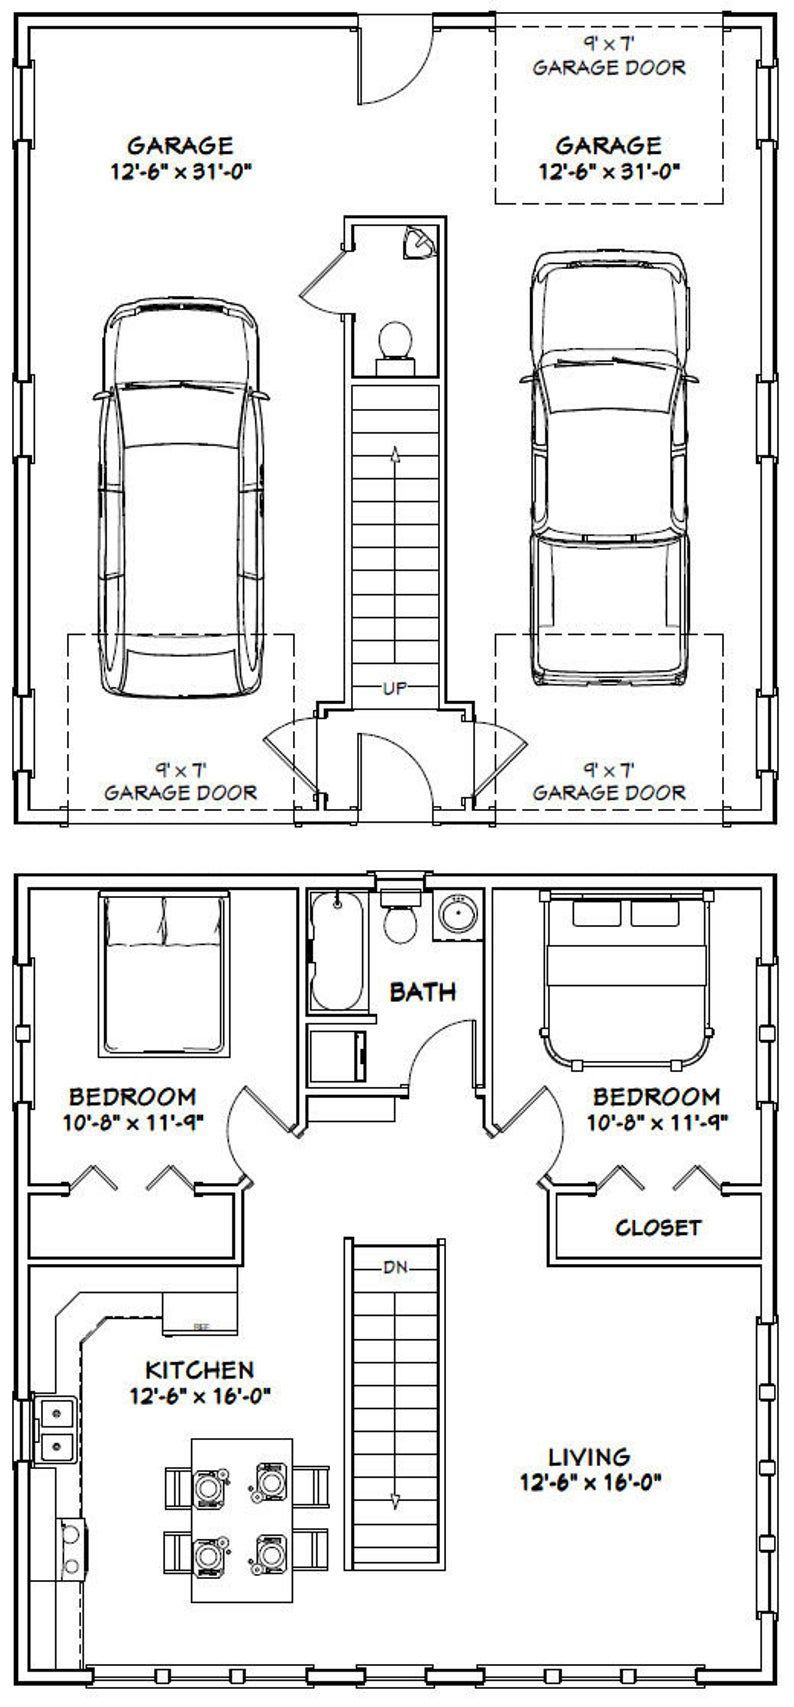 30x32 House  2-Bedroom 1.5 Bath  961 sq ft  PDF Floor | Etsy - 30x32 House  2-Bedroom 1.5 Bath  961 sq ft  PDF Floor | Etsy -   15 diy House plans ideas